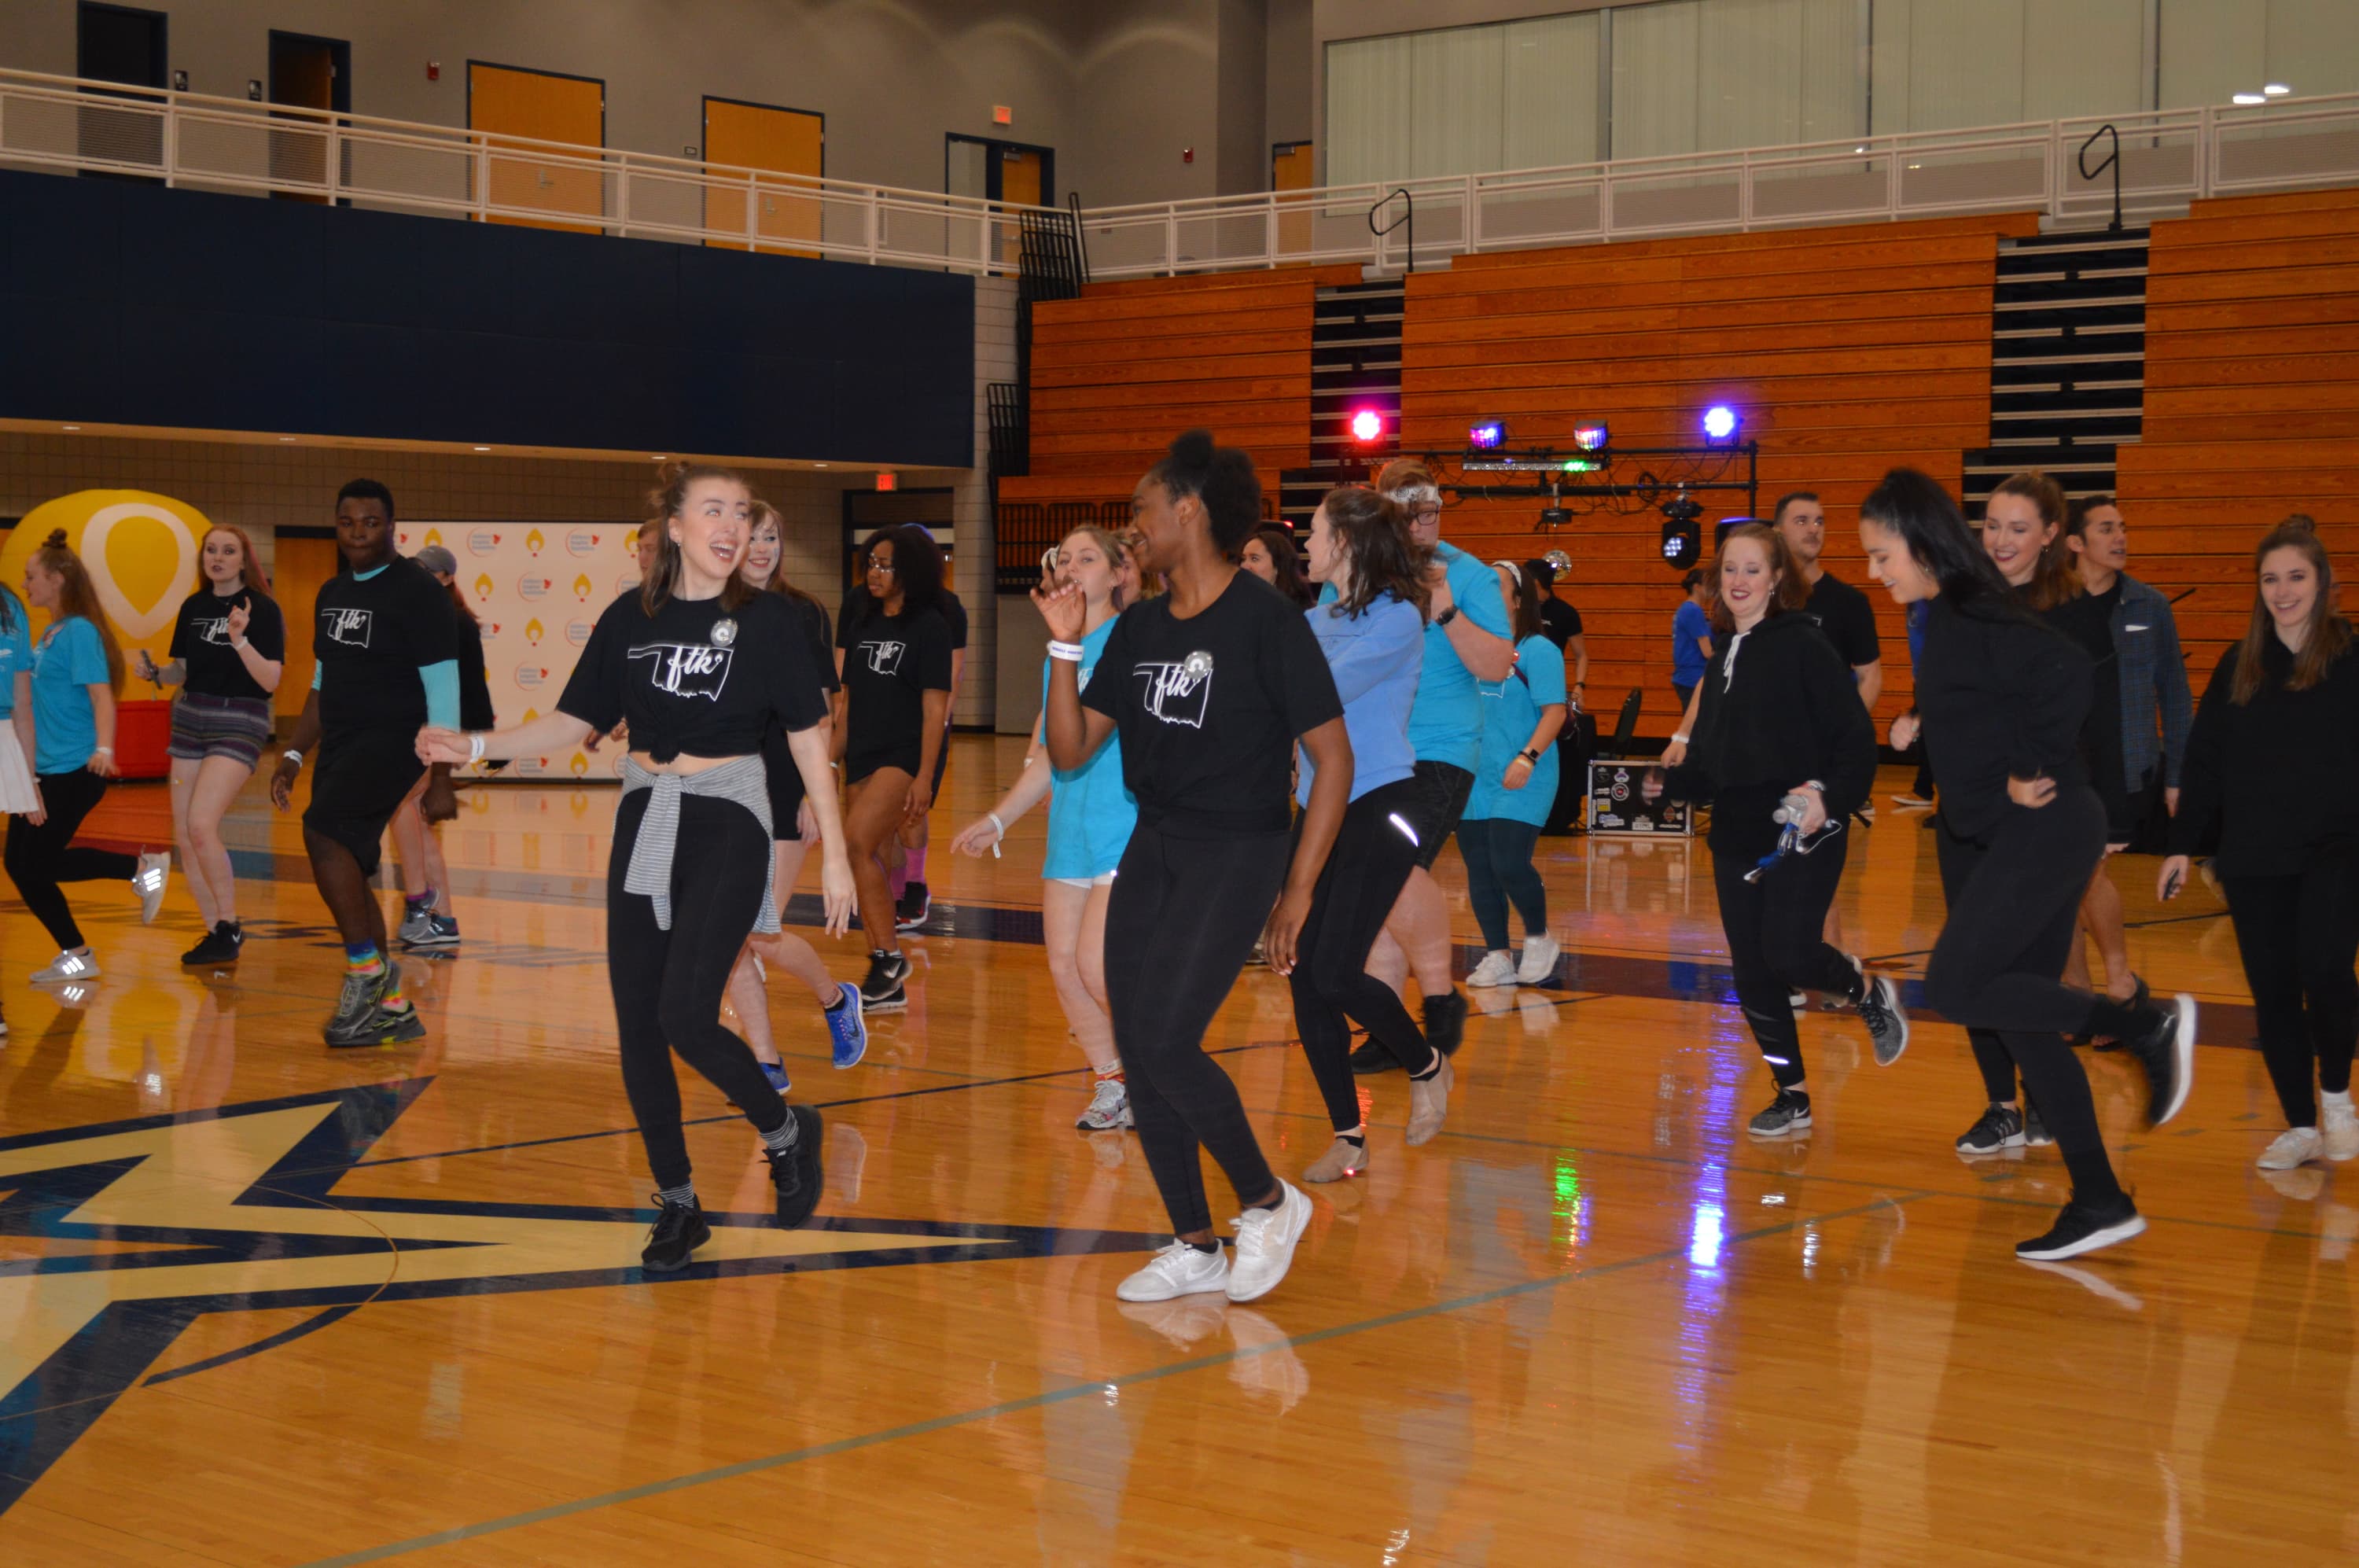 Students dance to raise money for Children's Hospital Foundation